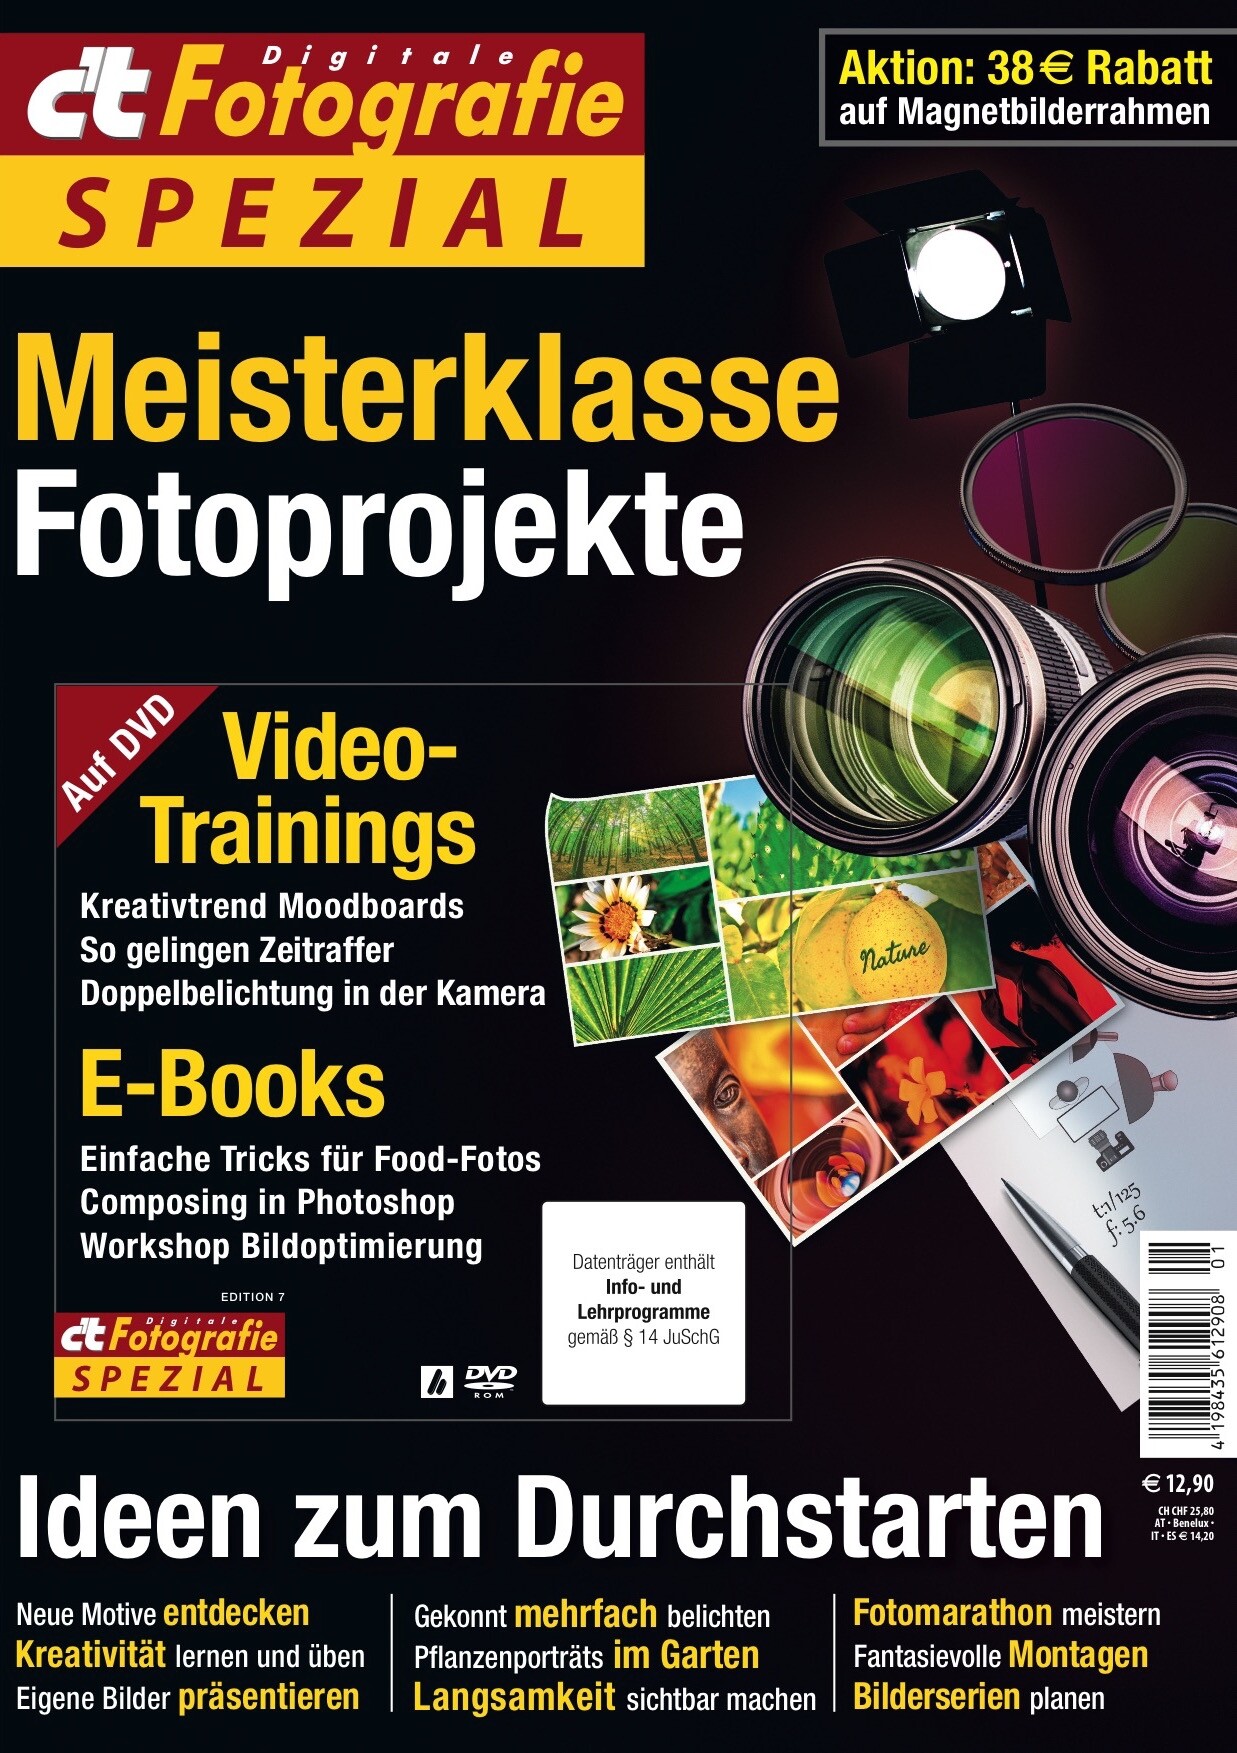 c't Fotografie Spezial: Meisterklasse Edition 7